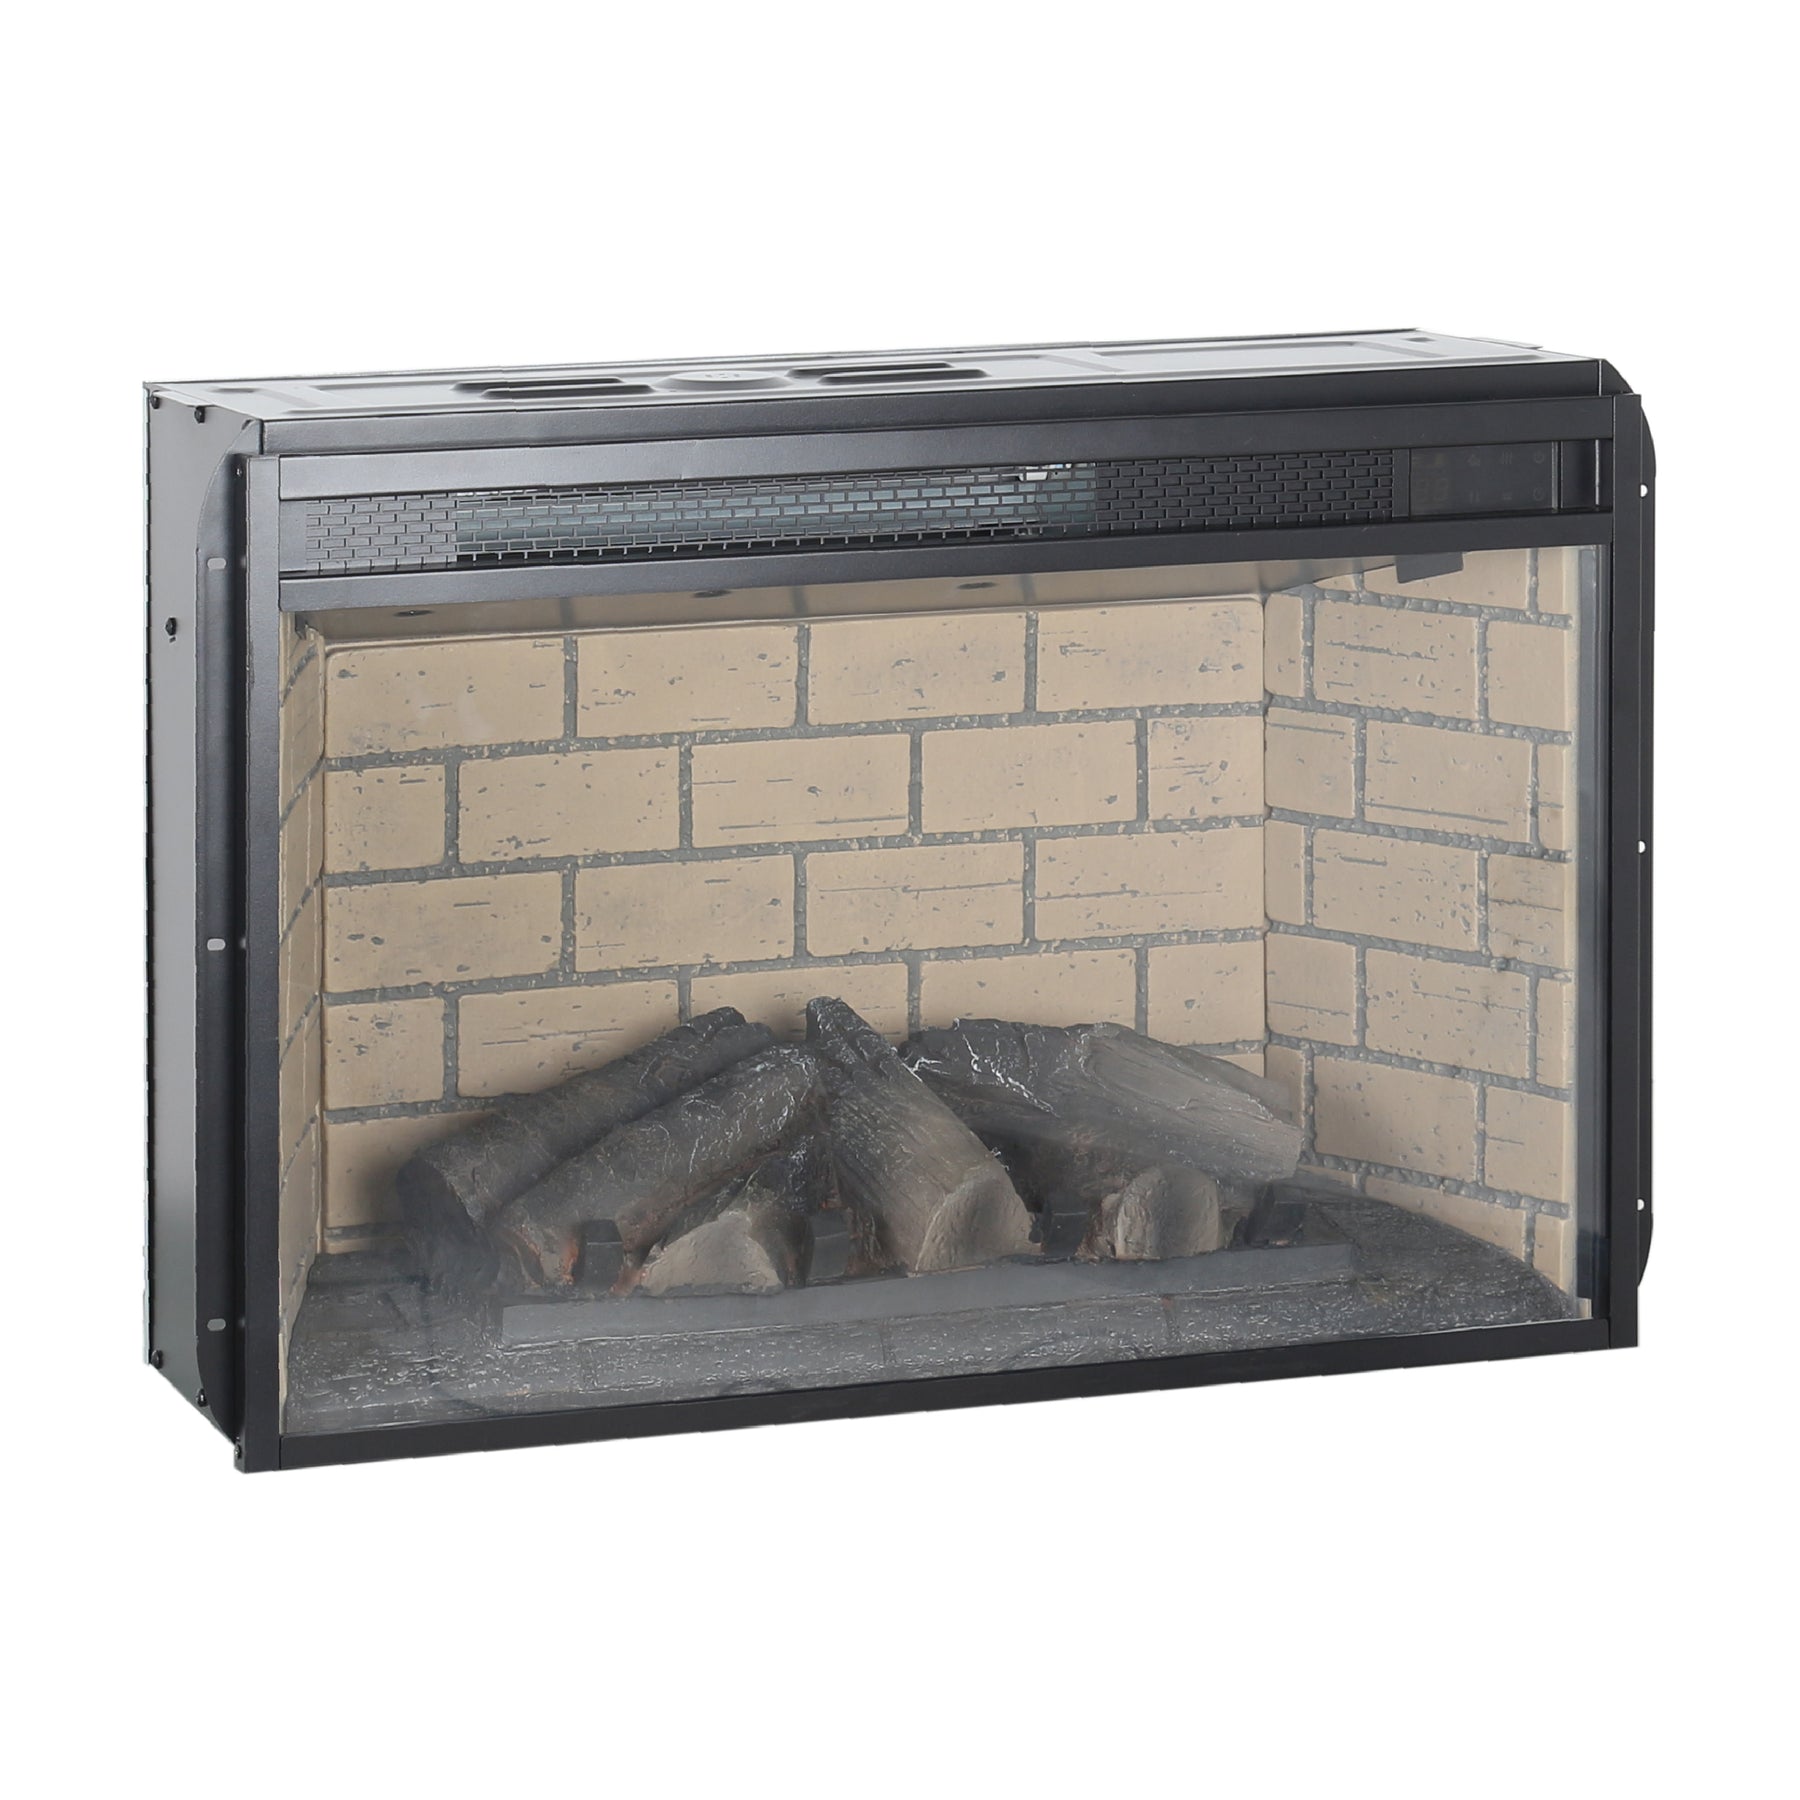 26 inch infrared quartz heater fireplace insert -woodlog version with brick - Tonkn